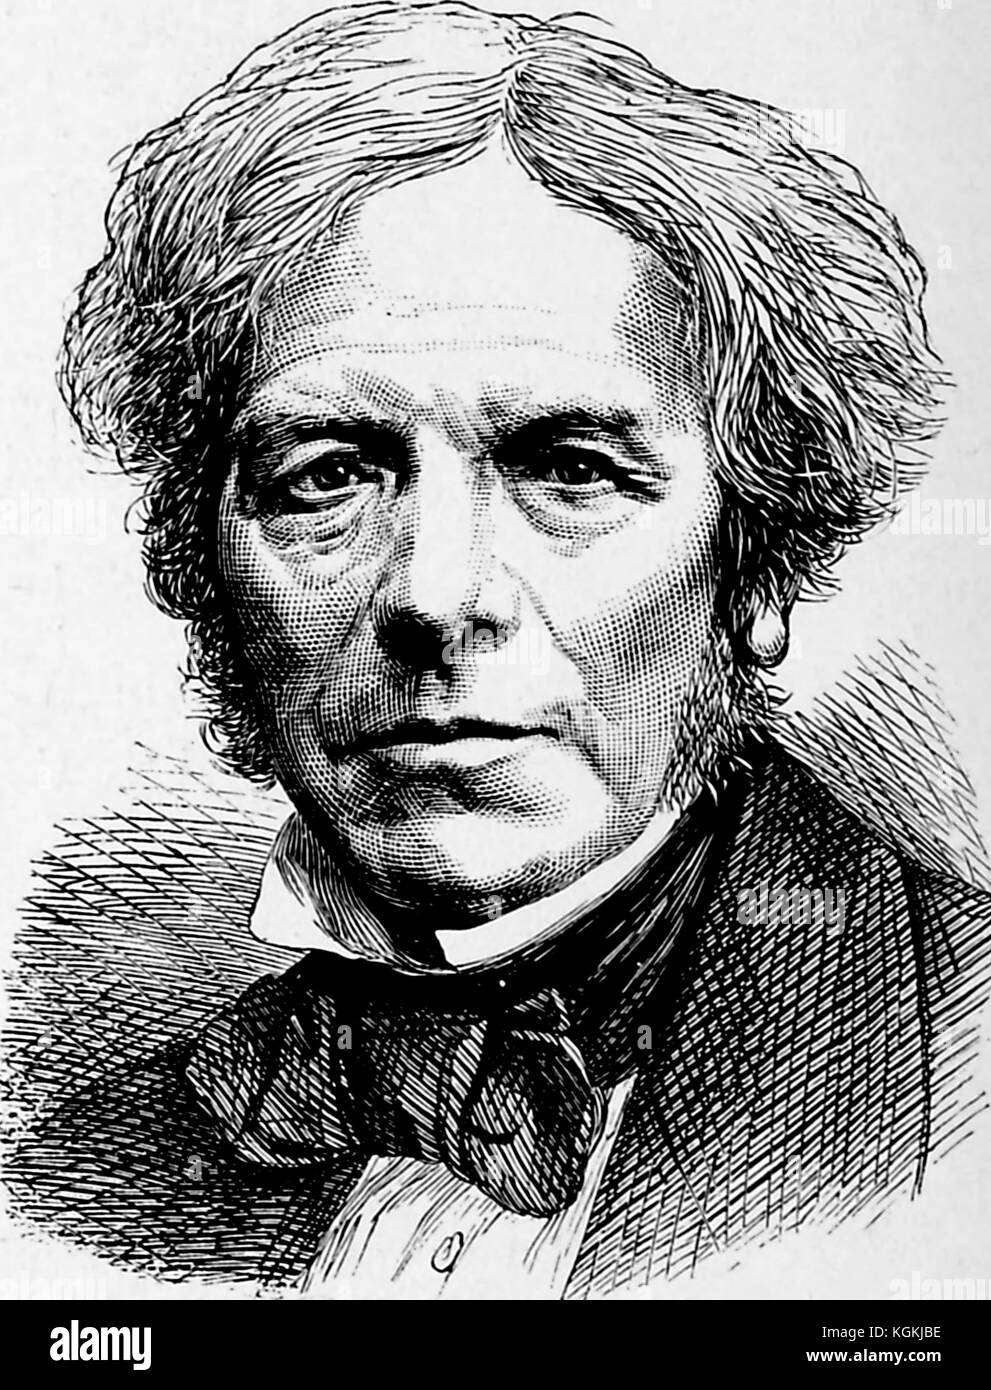 NPG Ax17794; Michael Faraday - Portrait - National Portrait Gallery